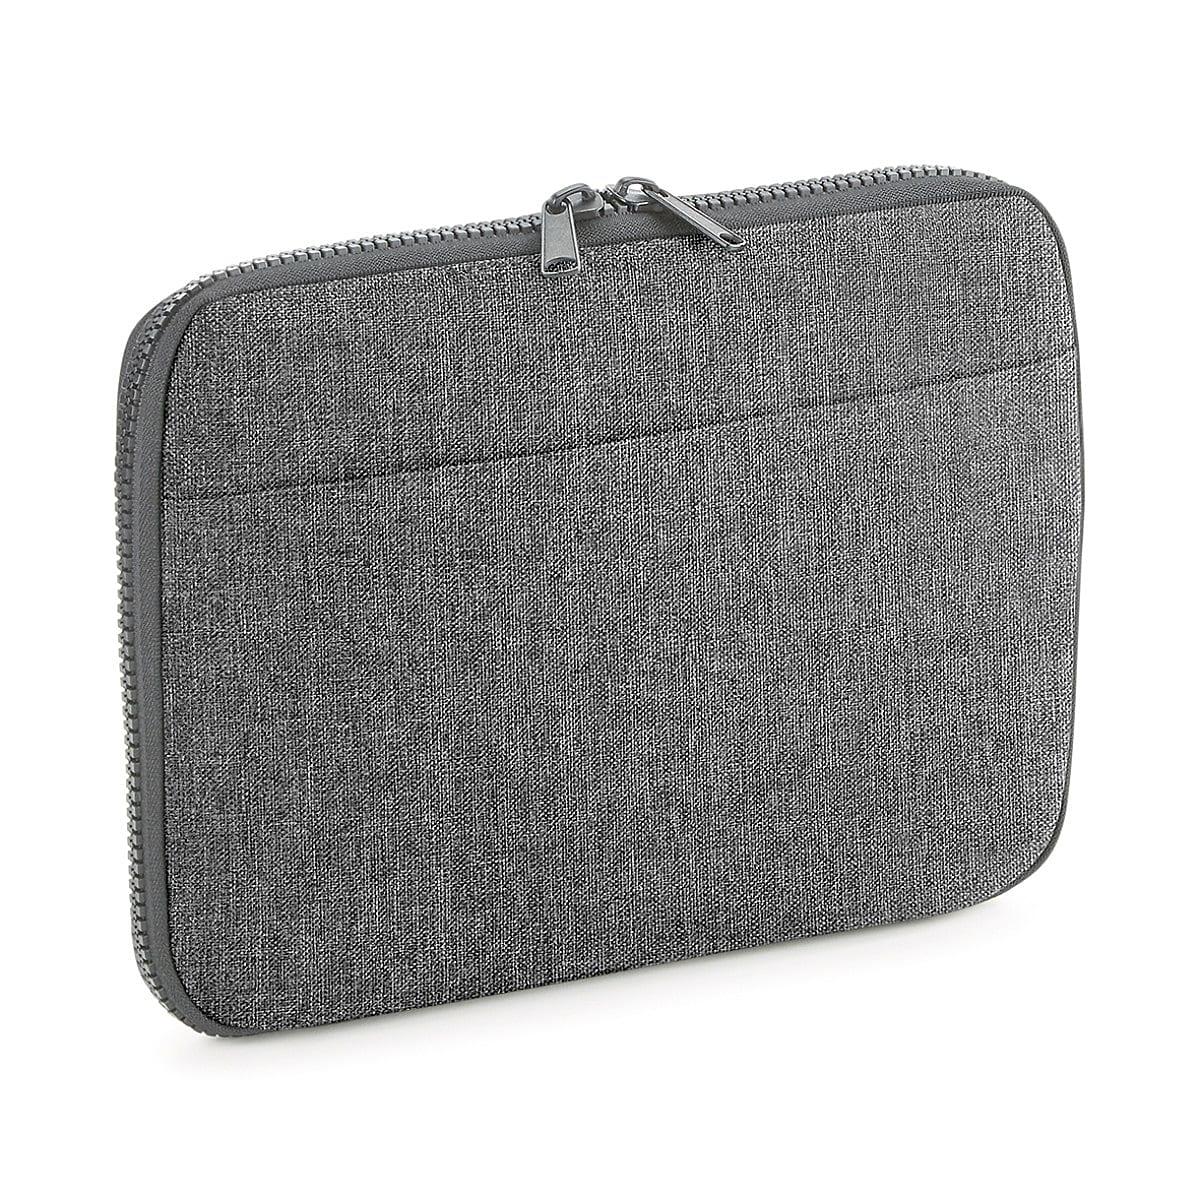 Bagbase Essential Tech Organiser in Grey Marl (Product Code: BG65)